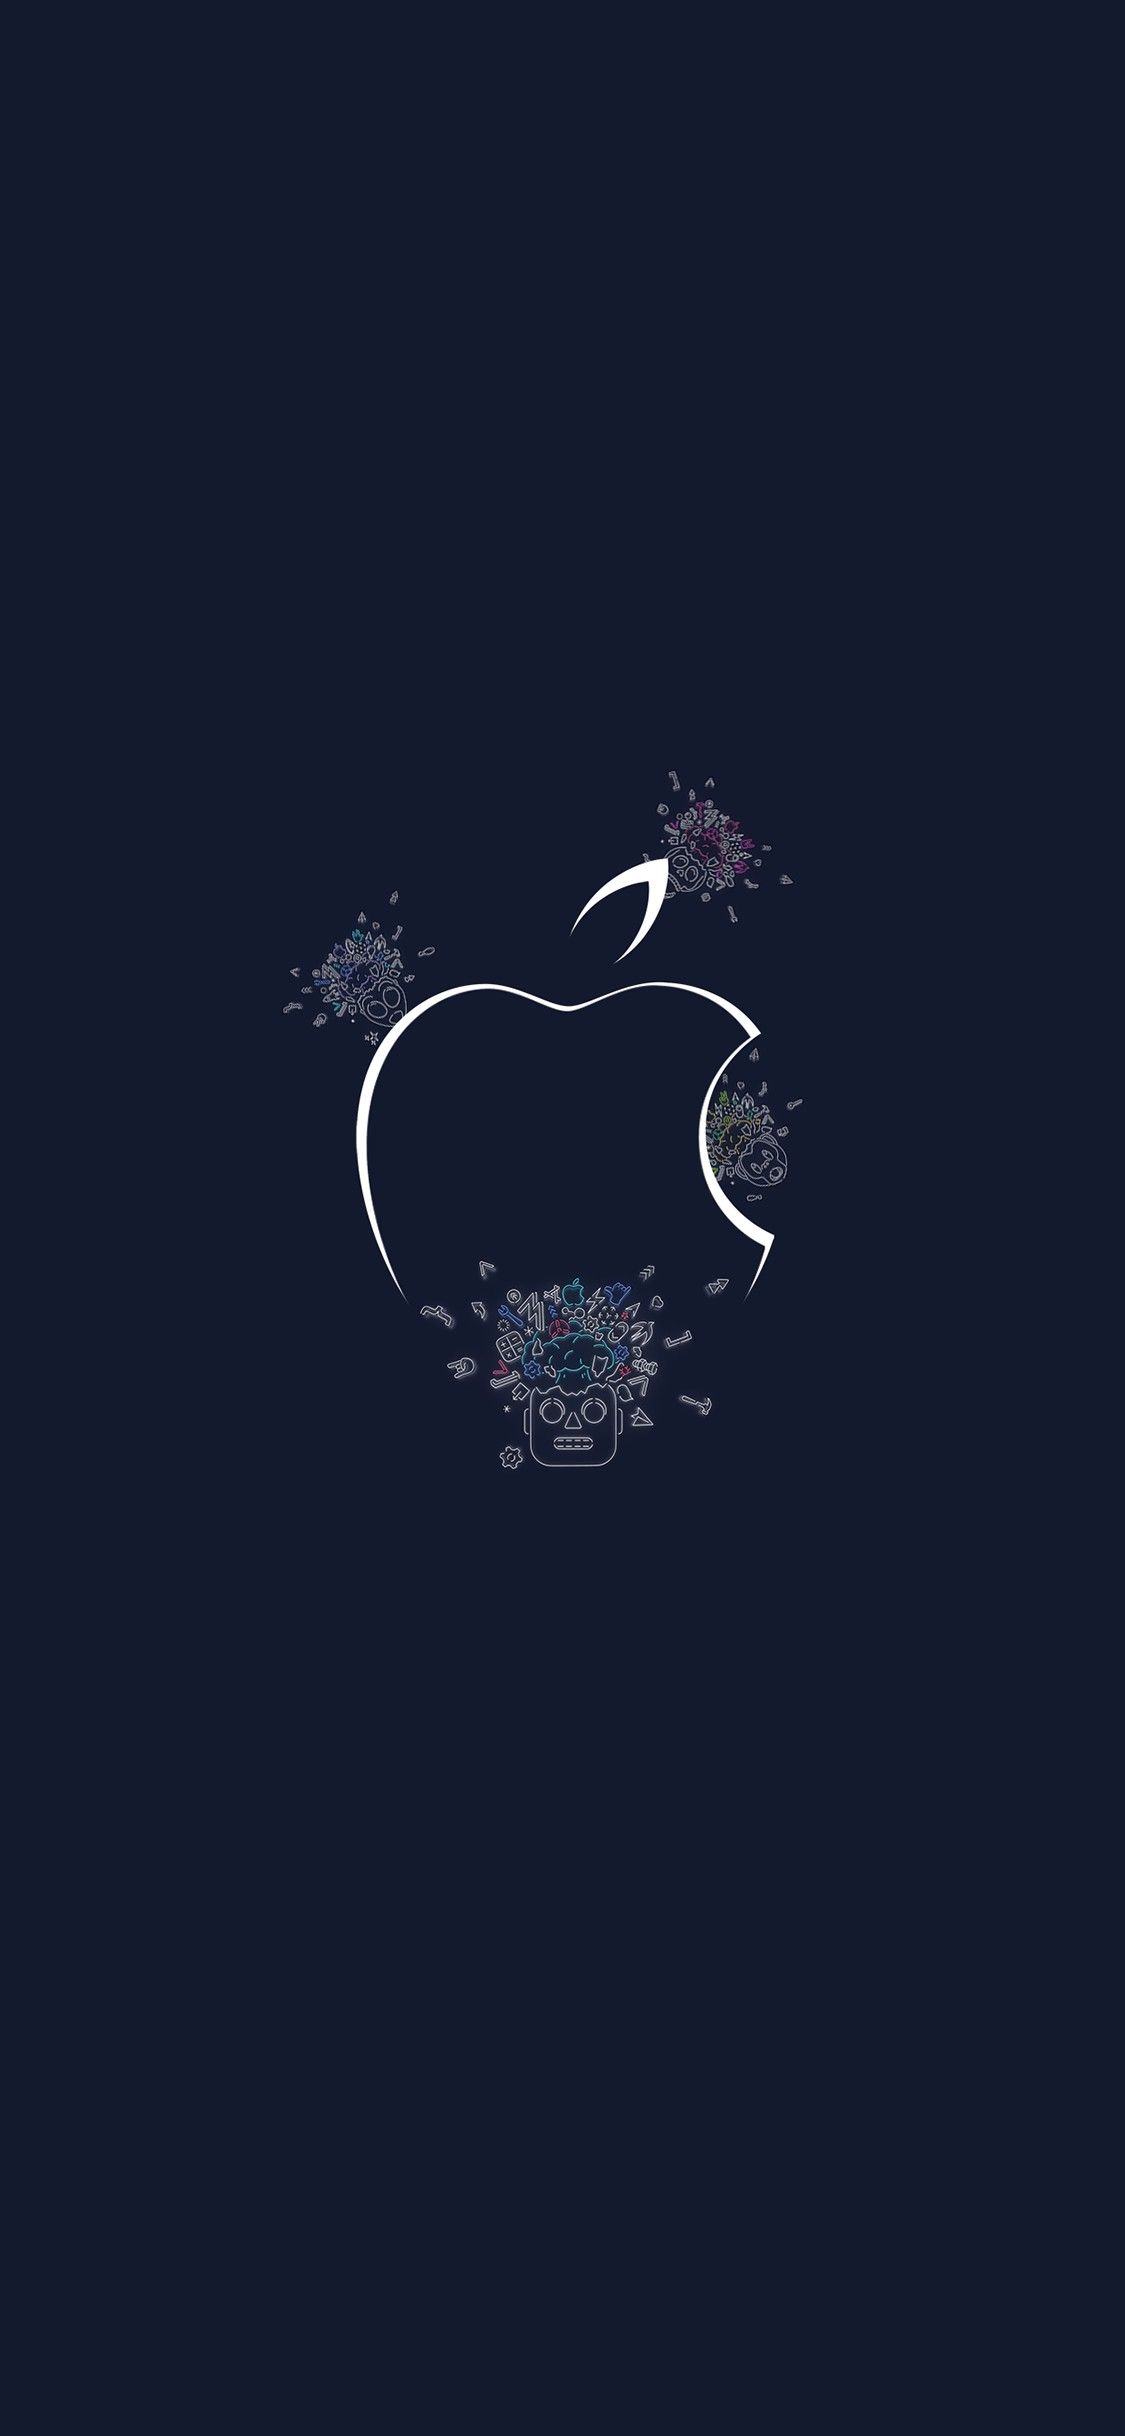 Awesome Apple Dynamic Wallpaper Apple logo wallpaper iphone